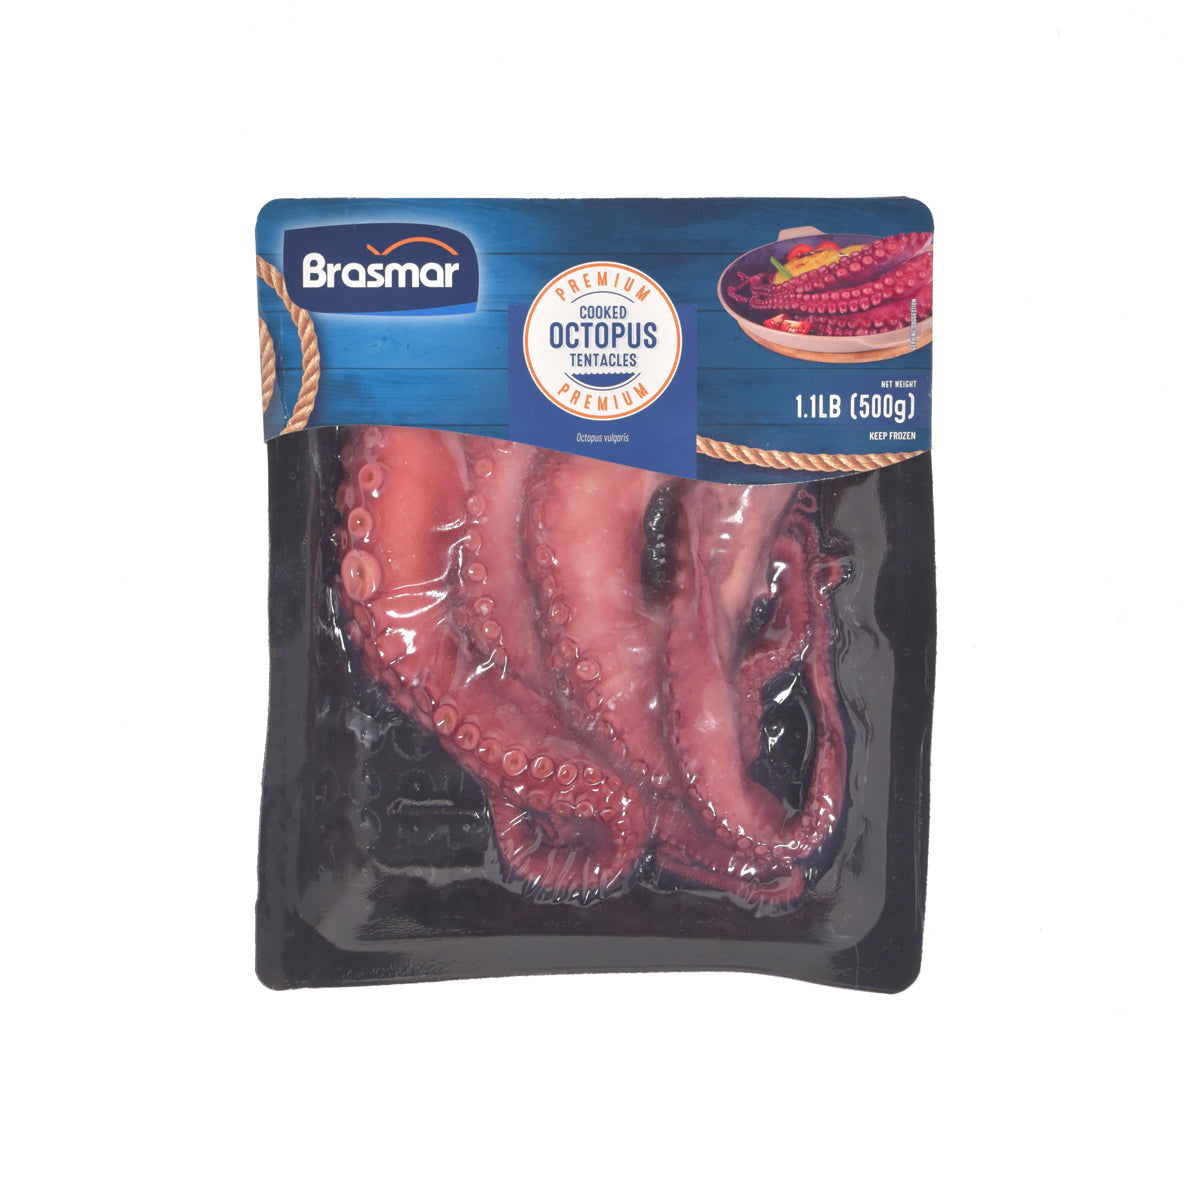 Val'S Ocean Pacific Seafood Cooked Mediterranean Octopus Tentacle 1.1 lb